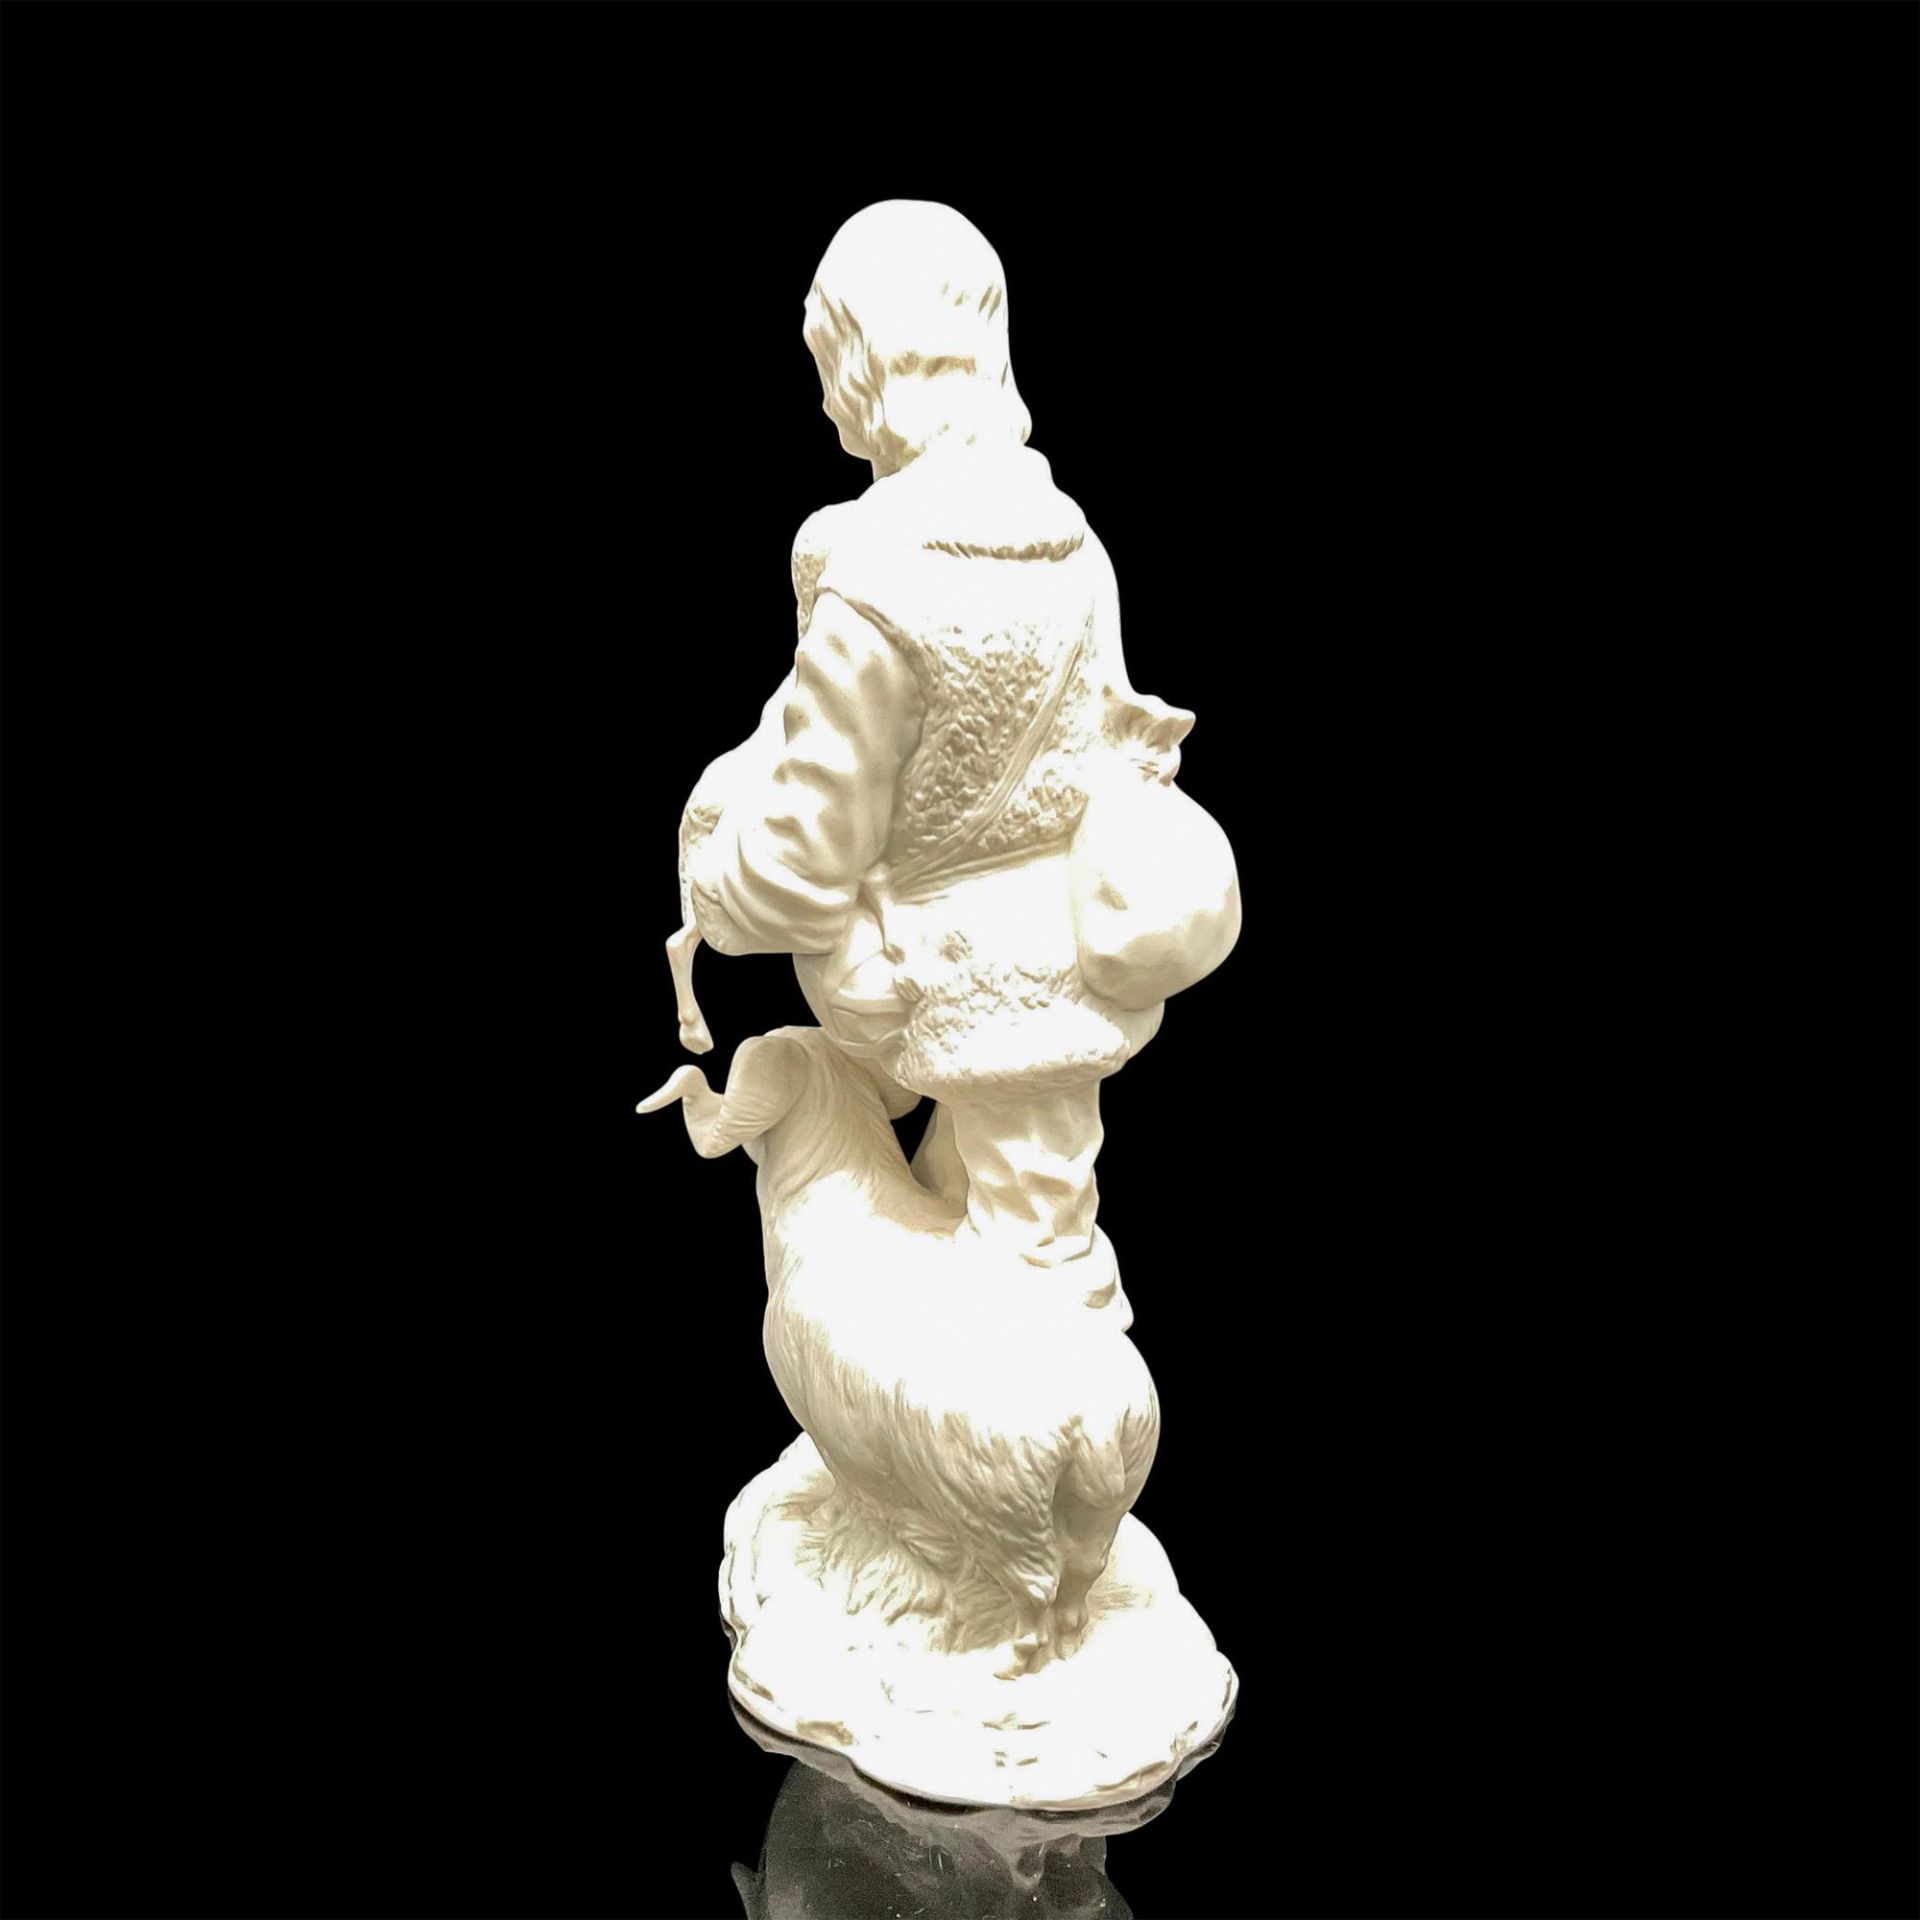 Boehm Christian Era Collection Figurine, Young Shepherd - Image 3 of 4